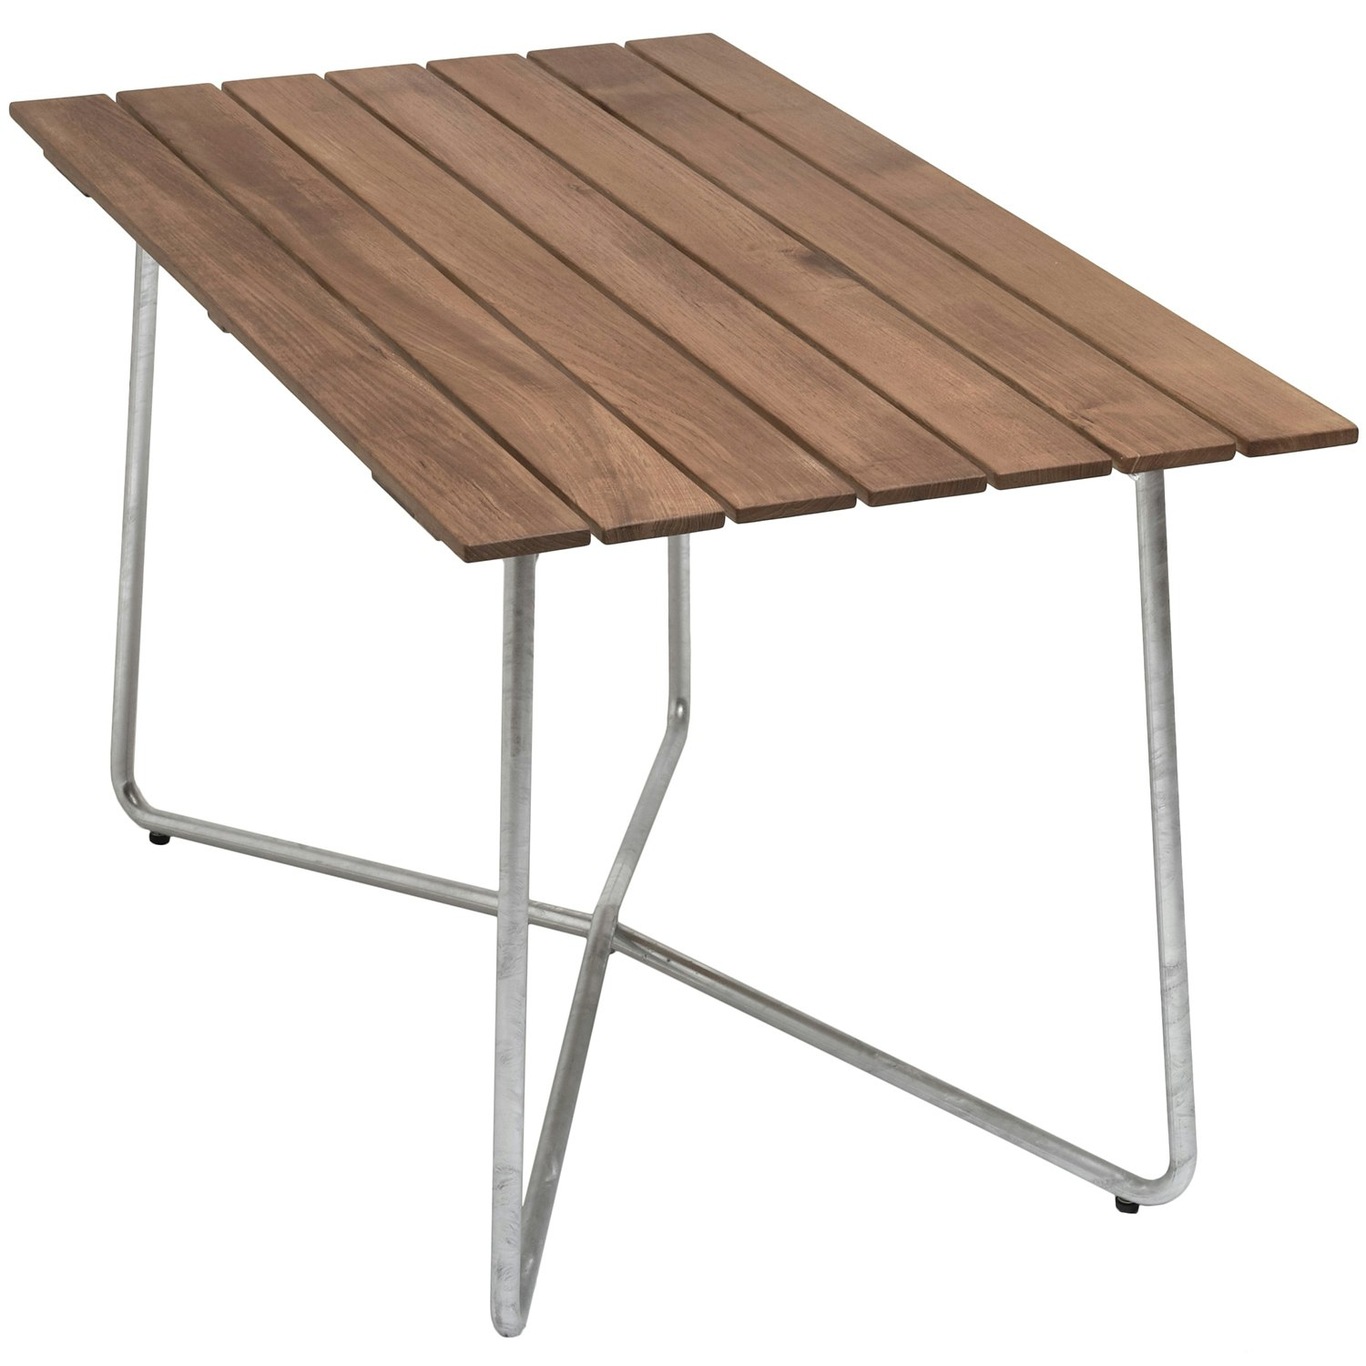 B25A Table 70x120 cm, Untreated Teak / Hot Galvanized Steel